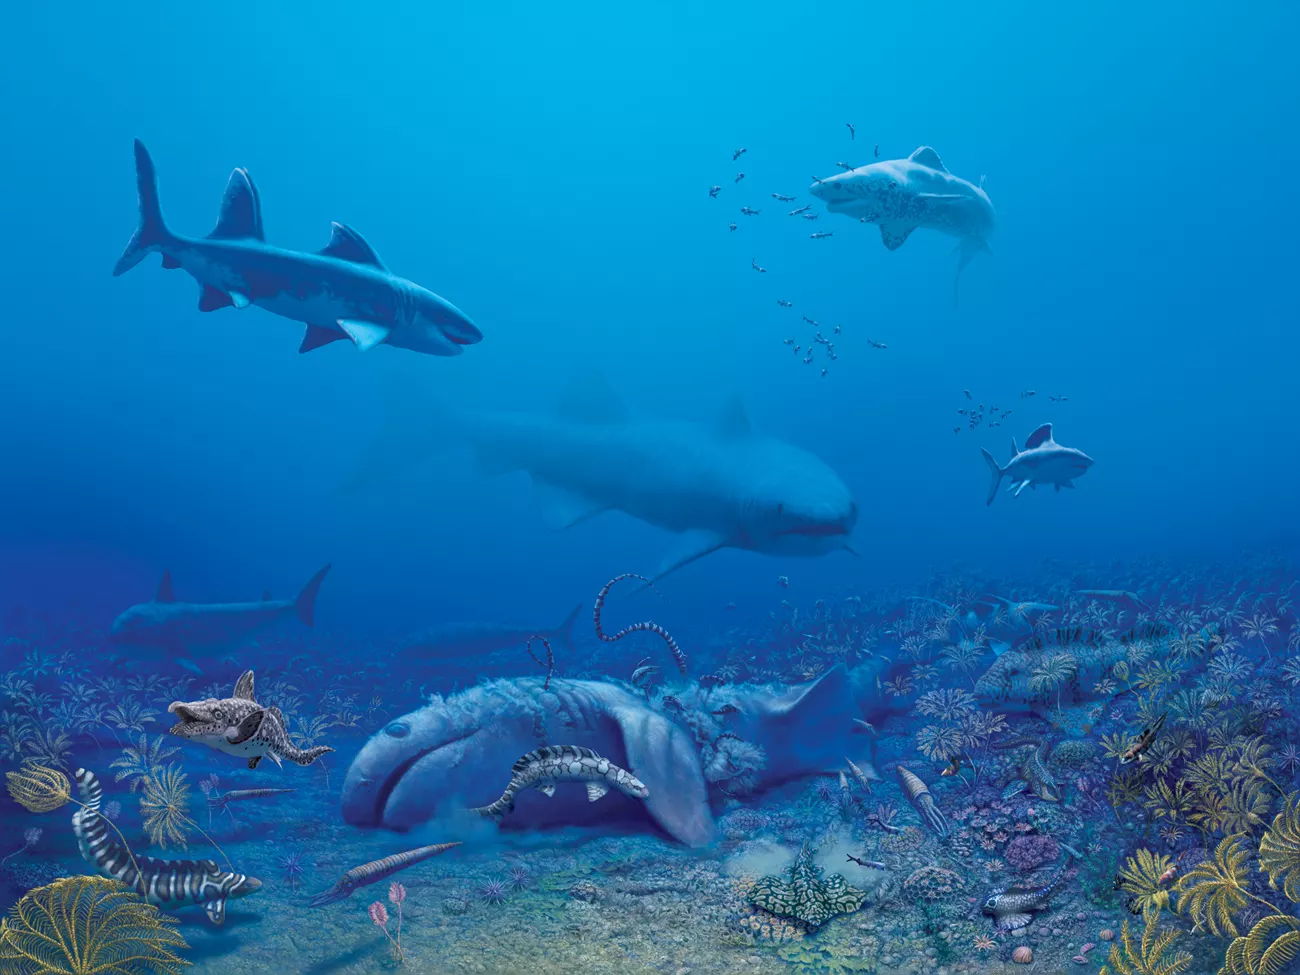 An artistâs illustration of an ancient sea that covered much of North America during the Mississippian age. A decaying shark lies on the bottom of the sea, with three live sharks and other fish swimming nearby. 